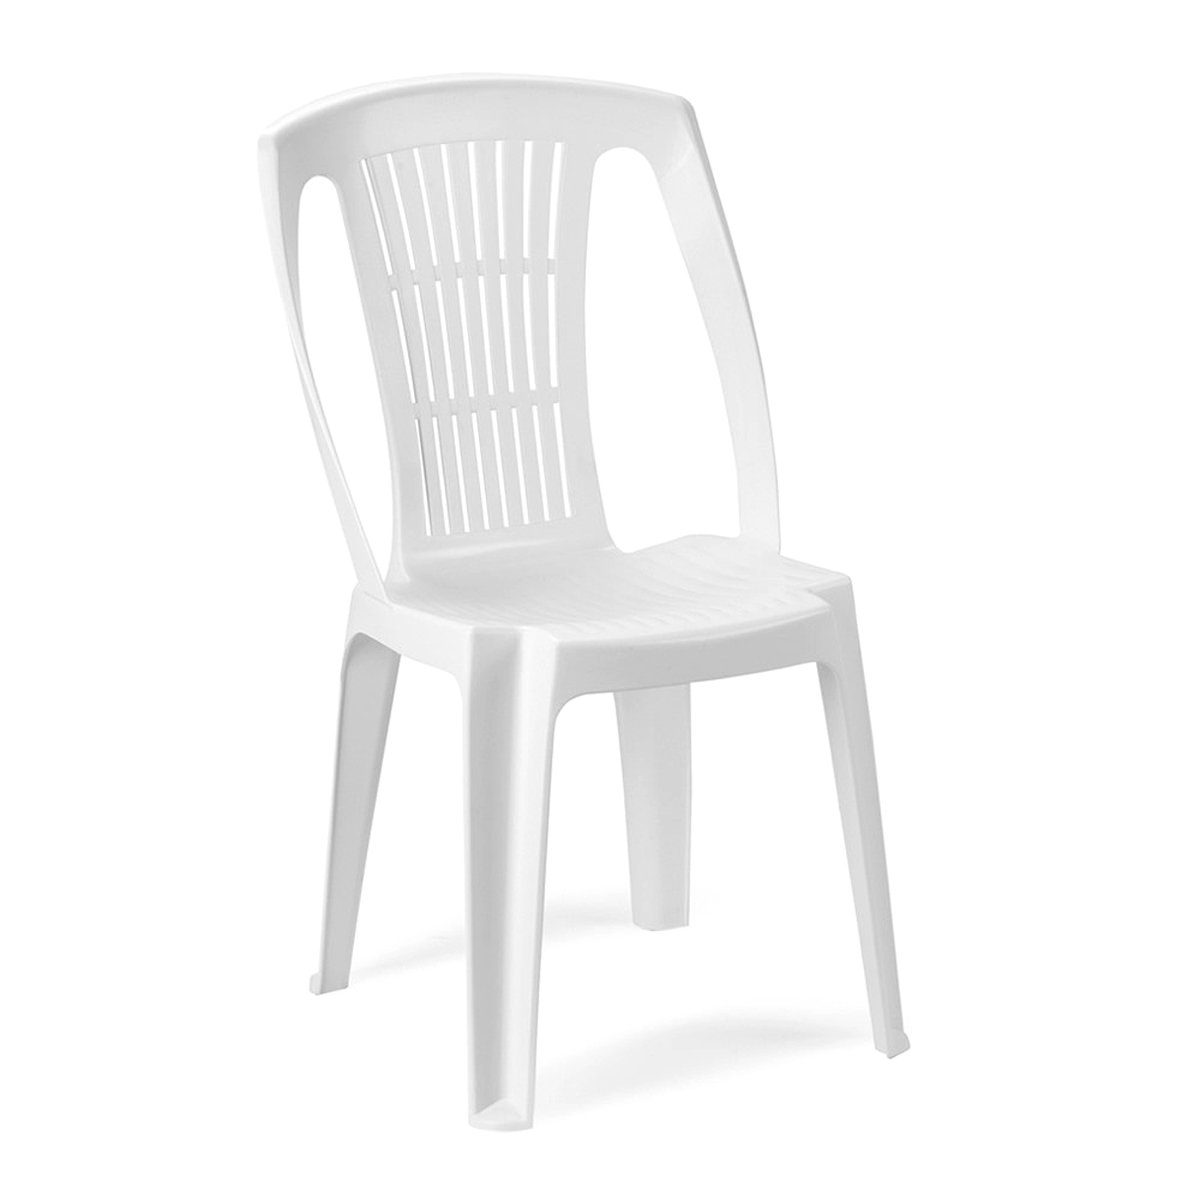 Stück Mojawo Armlehnstuhl Stapelstuhl Weiß 2 Kunststoff